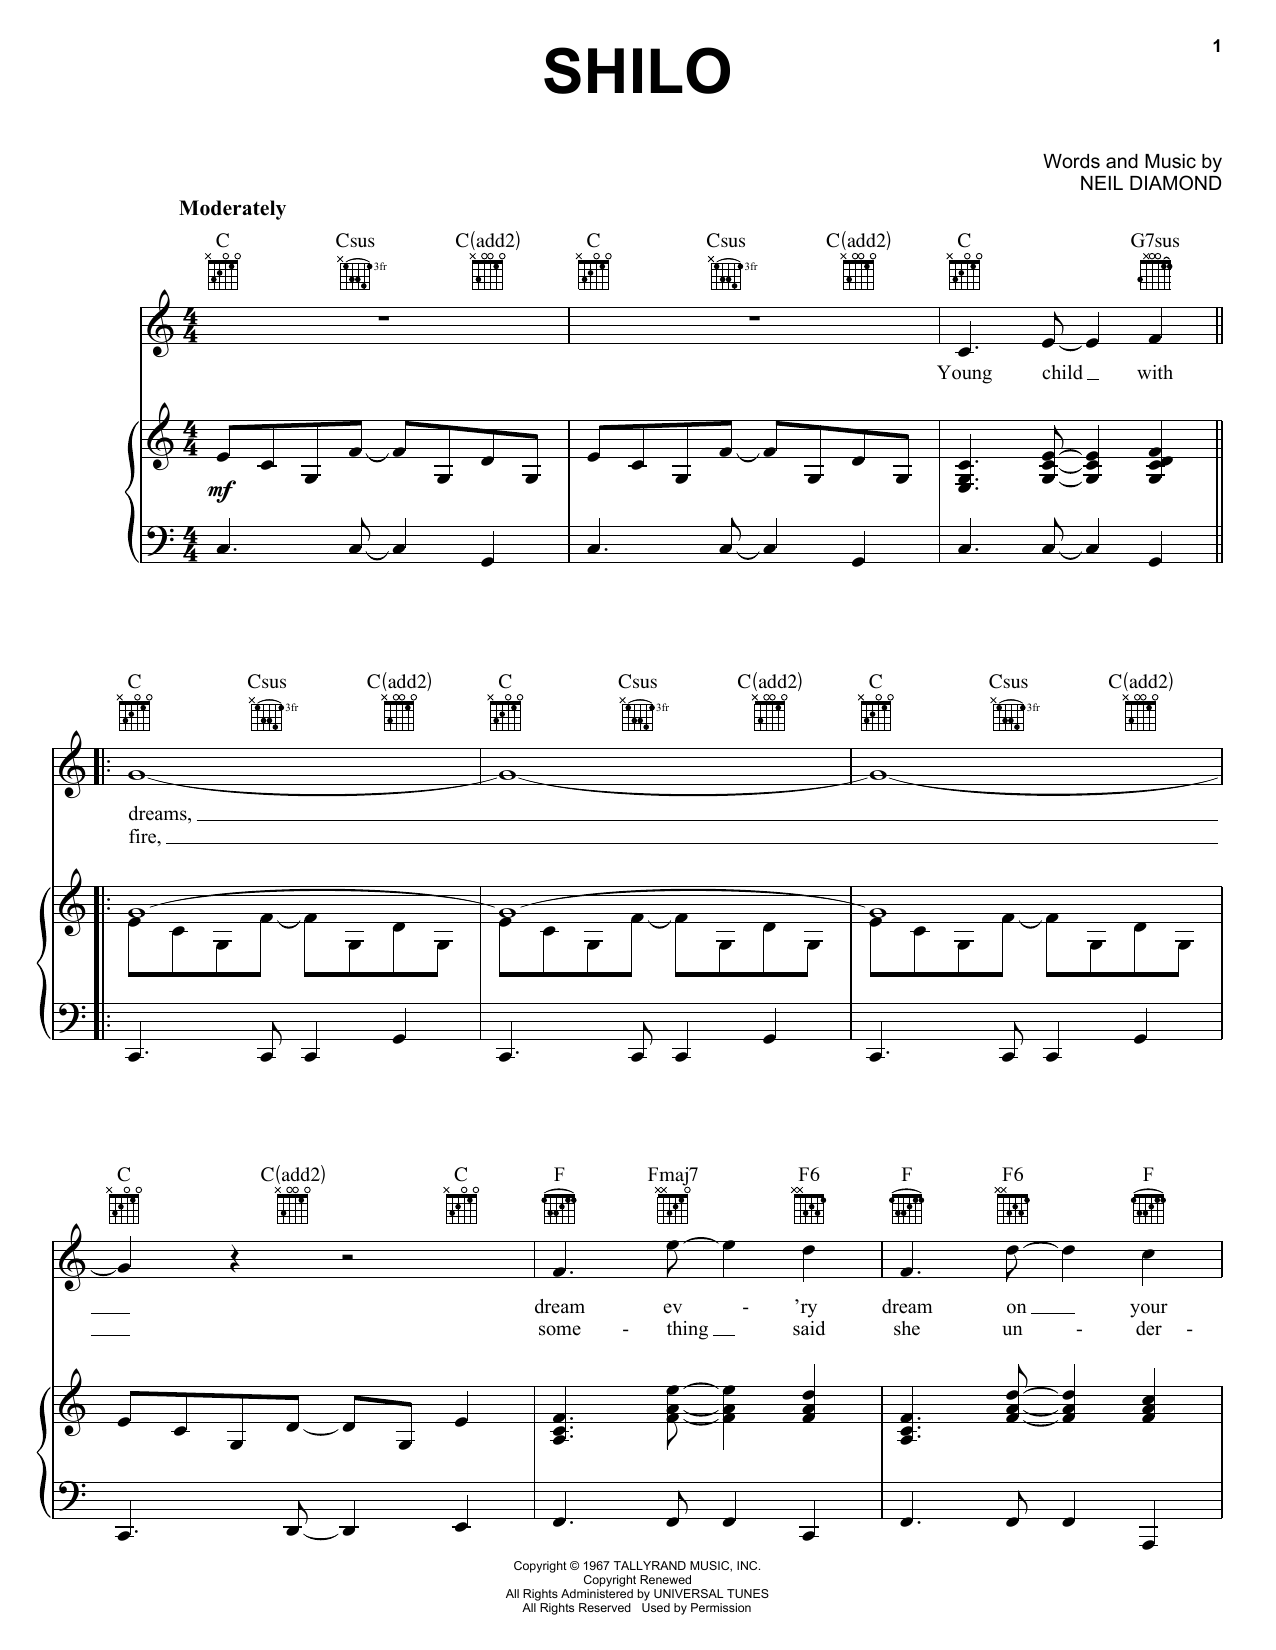 Neil Diamond Shilo Sheet Music Notes & Chords for Ukulele - Download or Print PDF